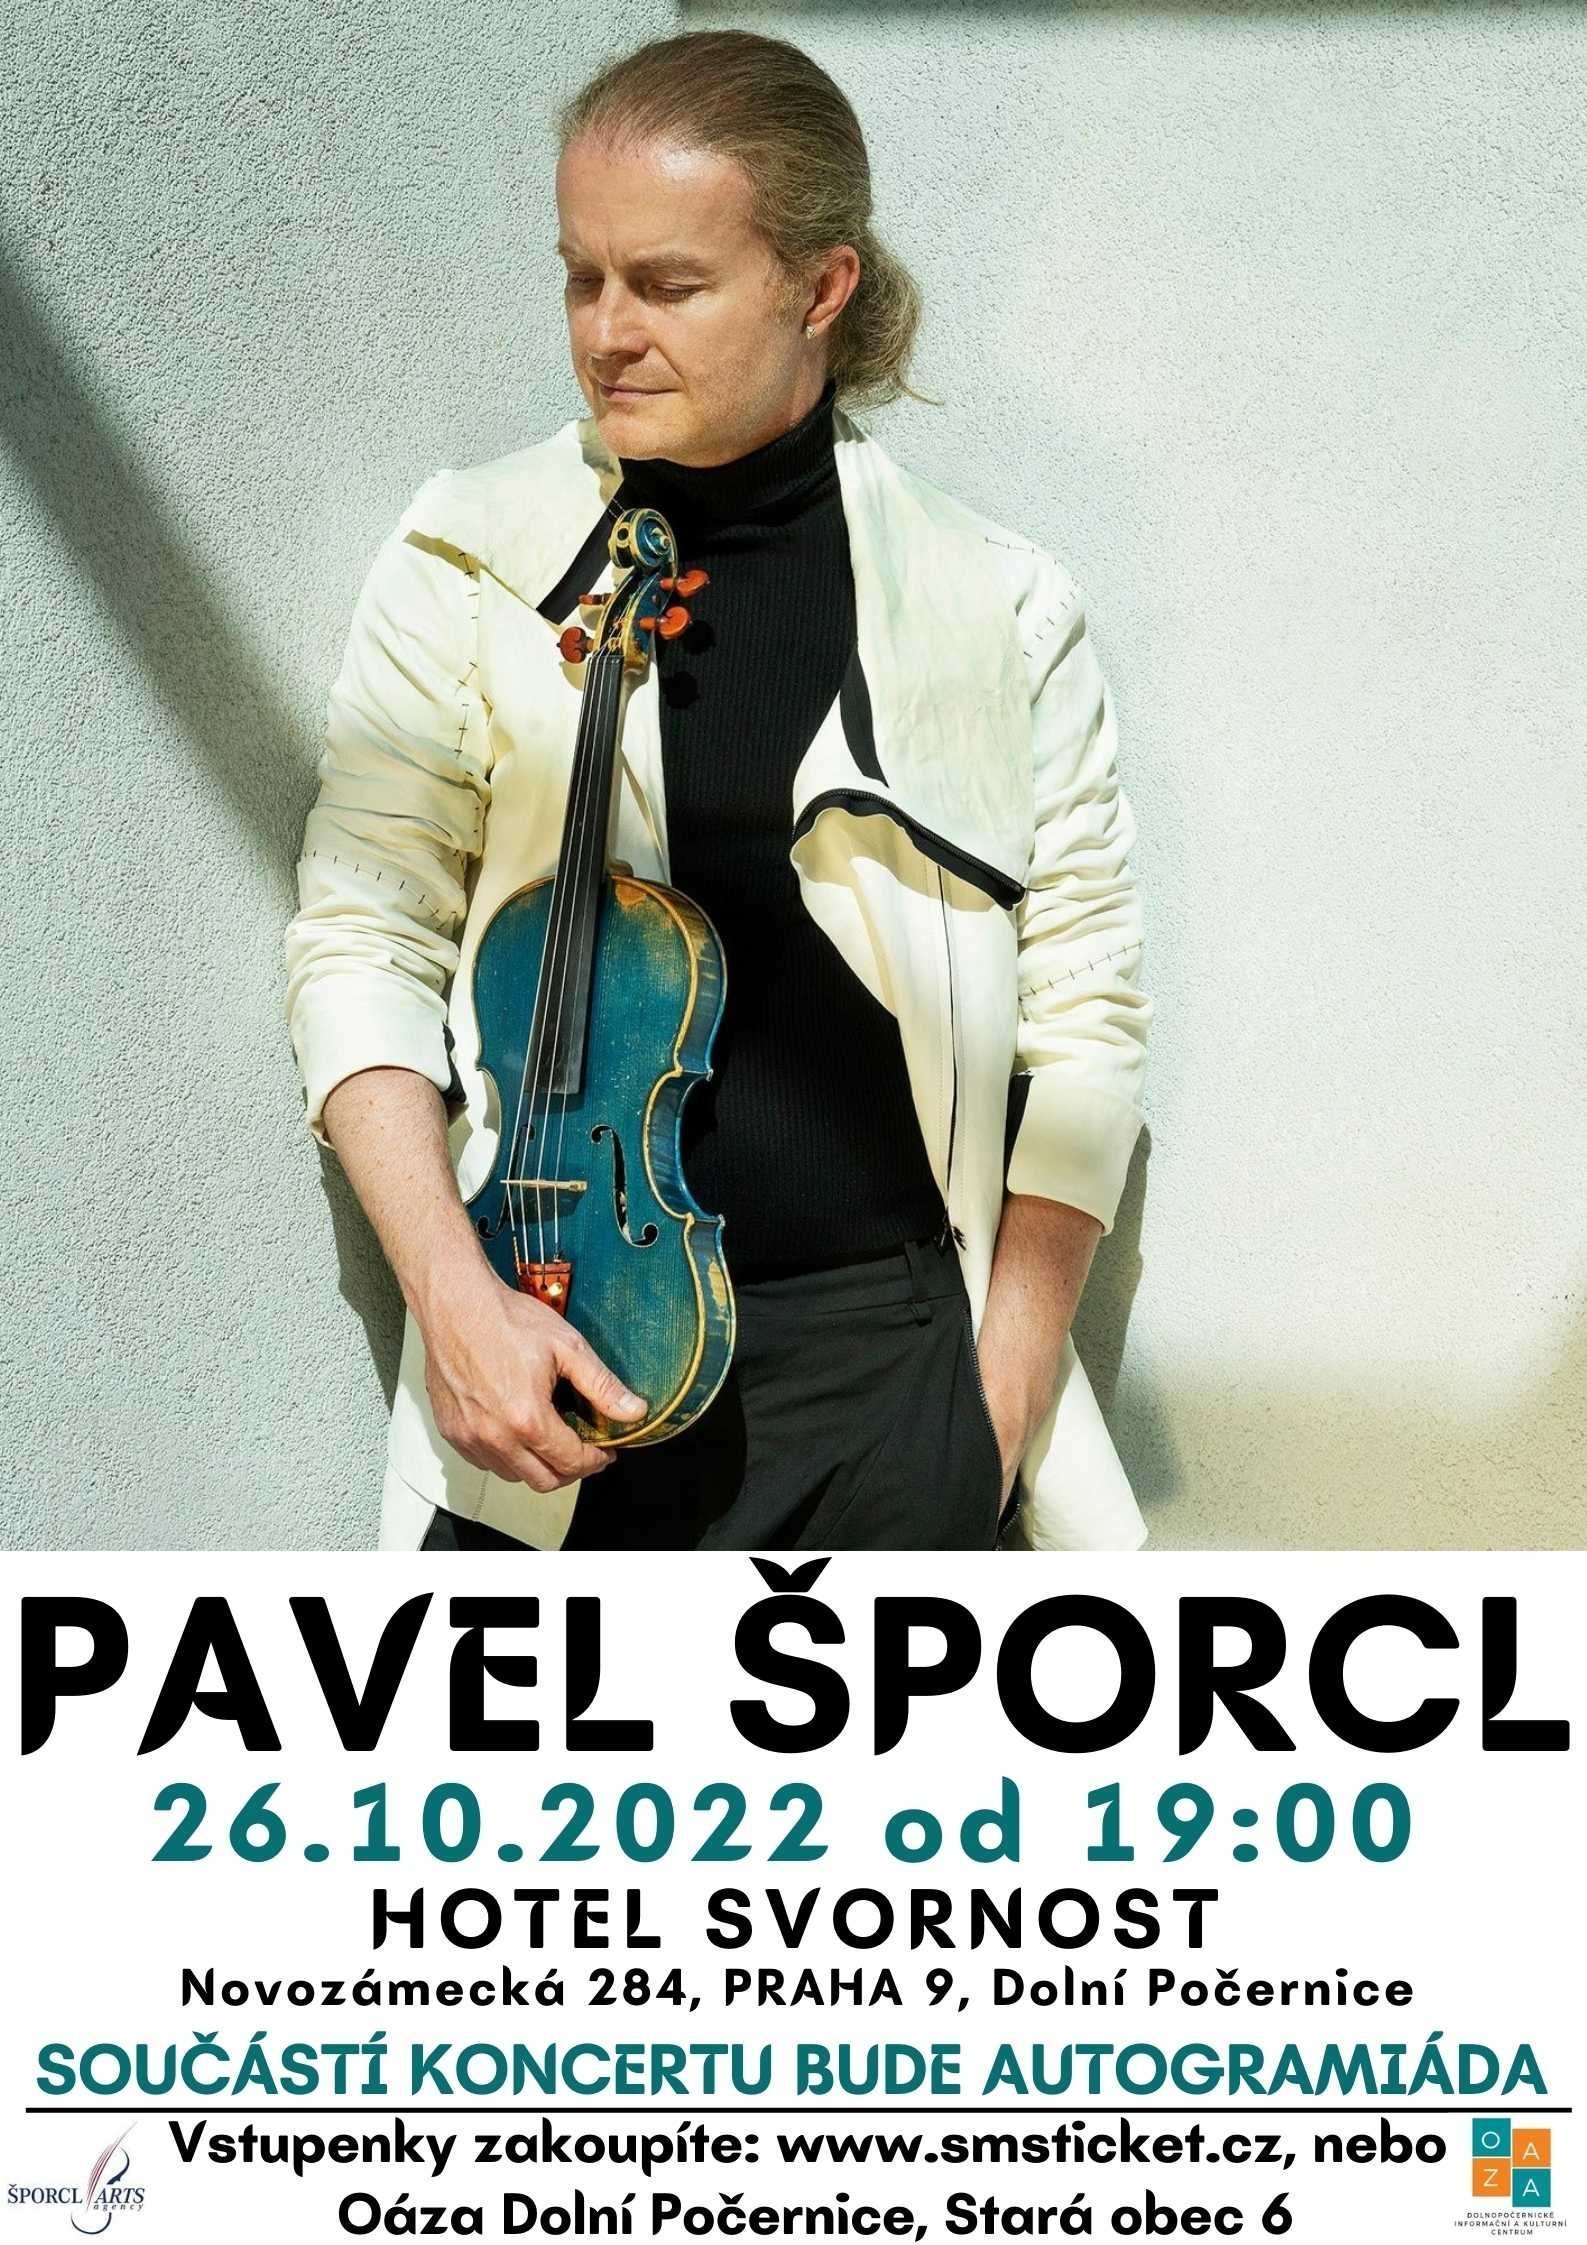 Concert of Pavel Šporcl